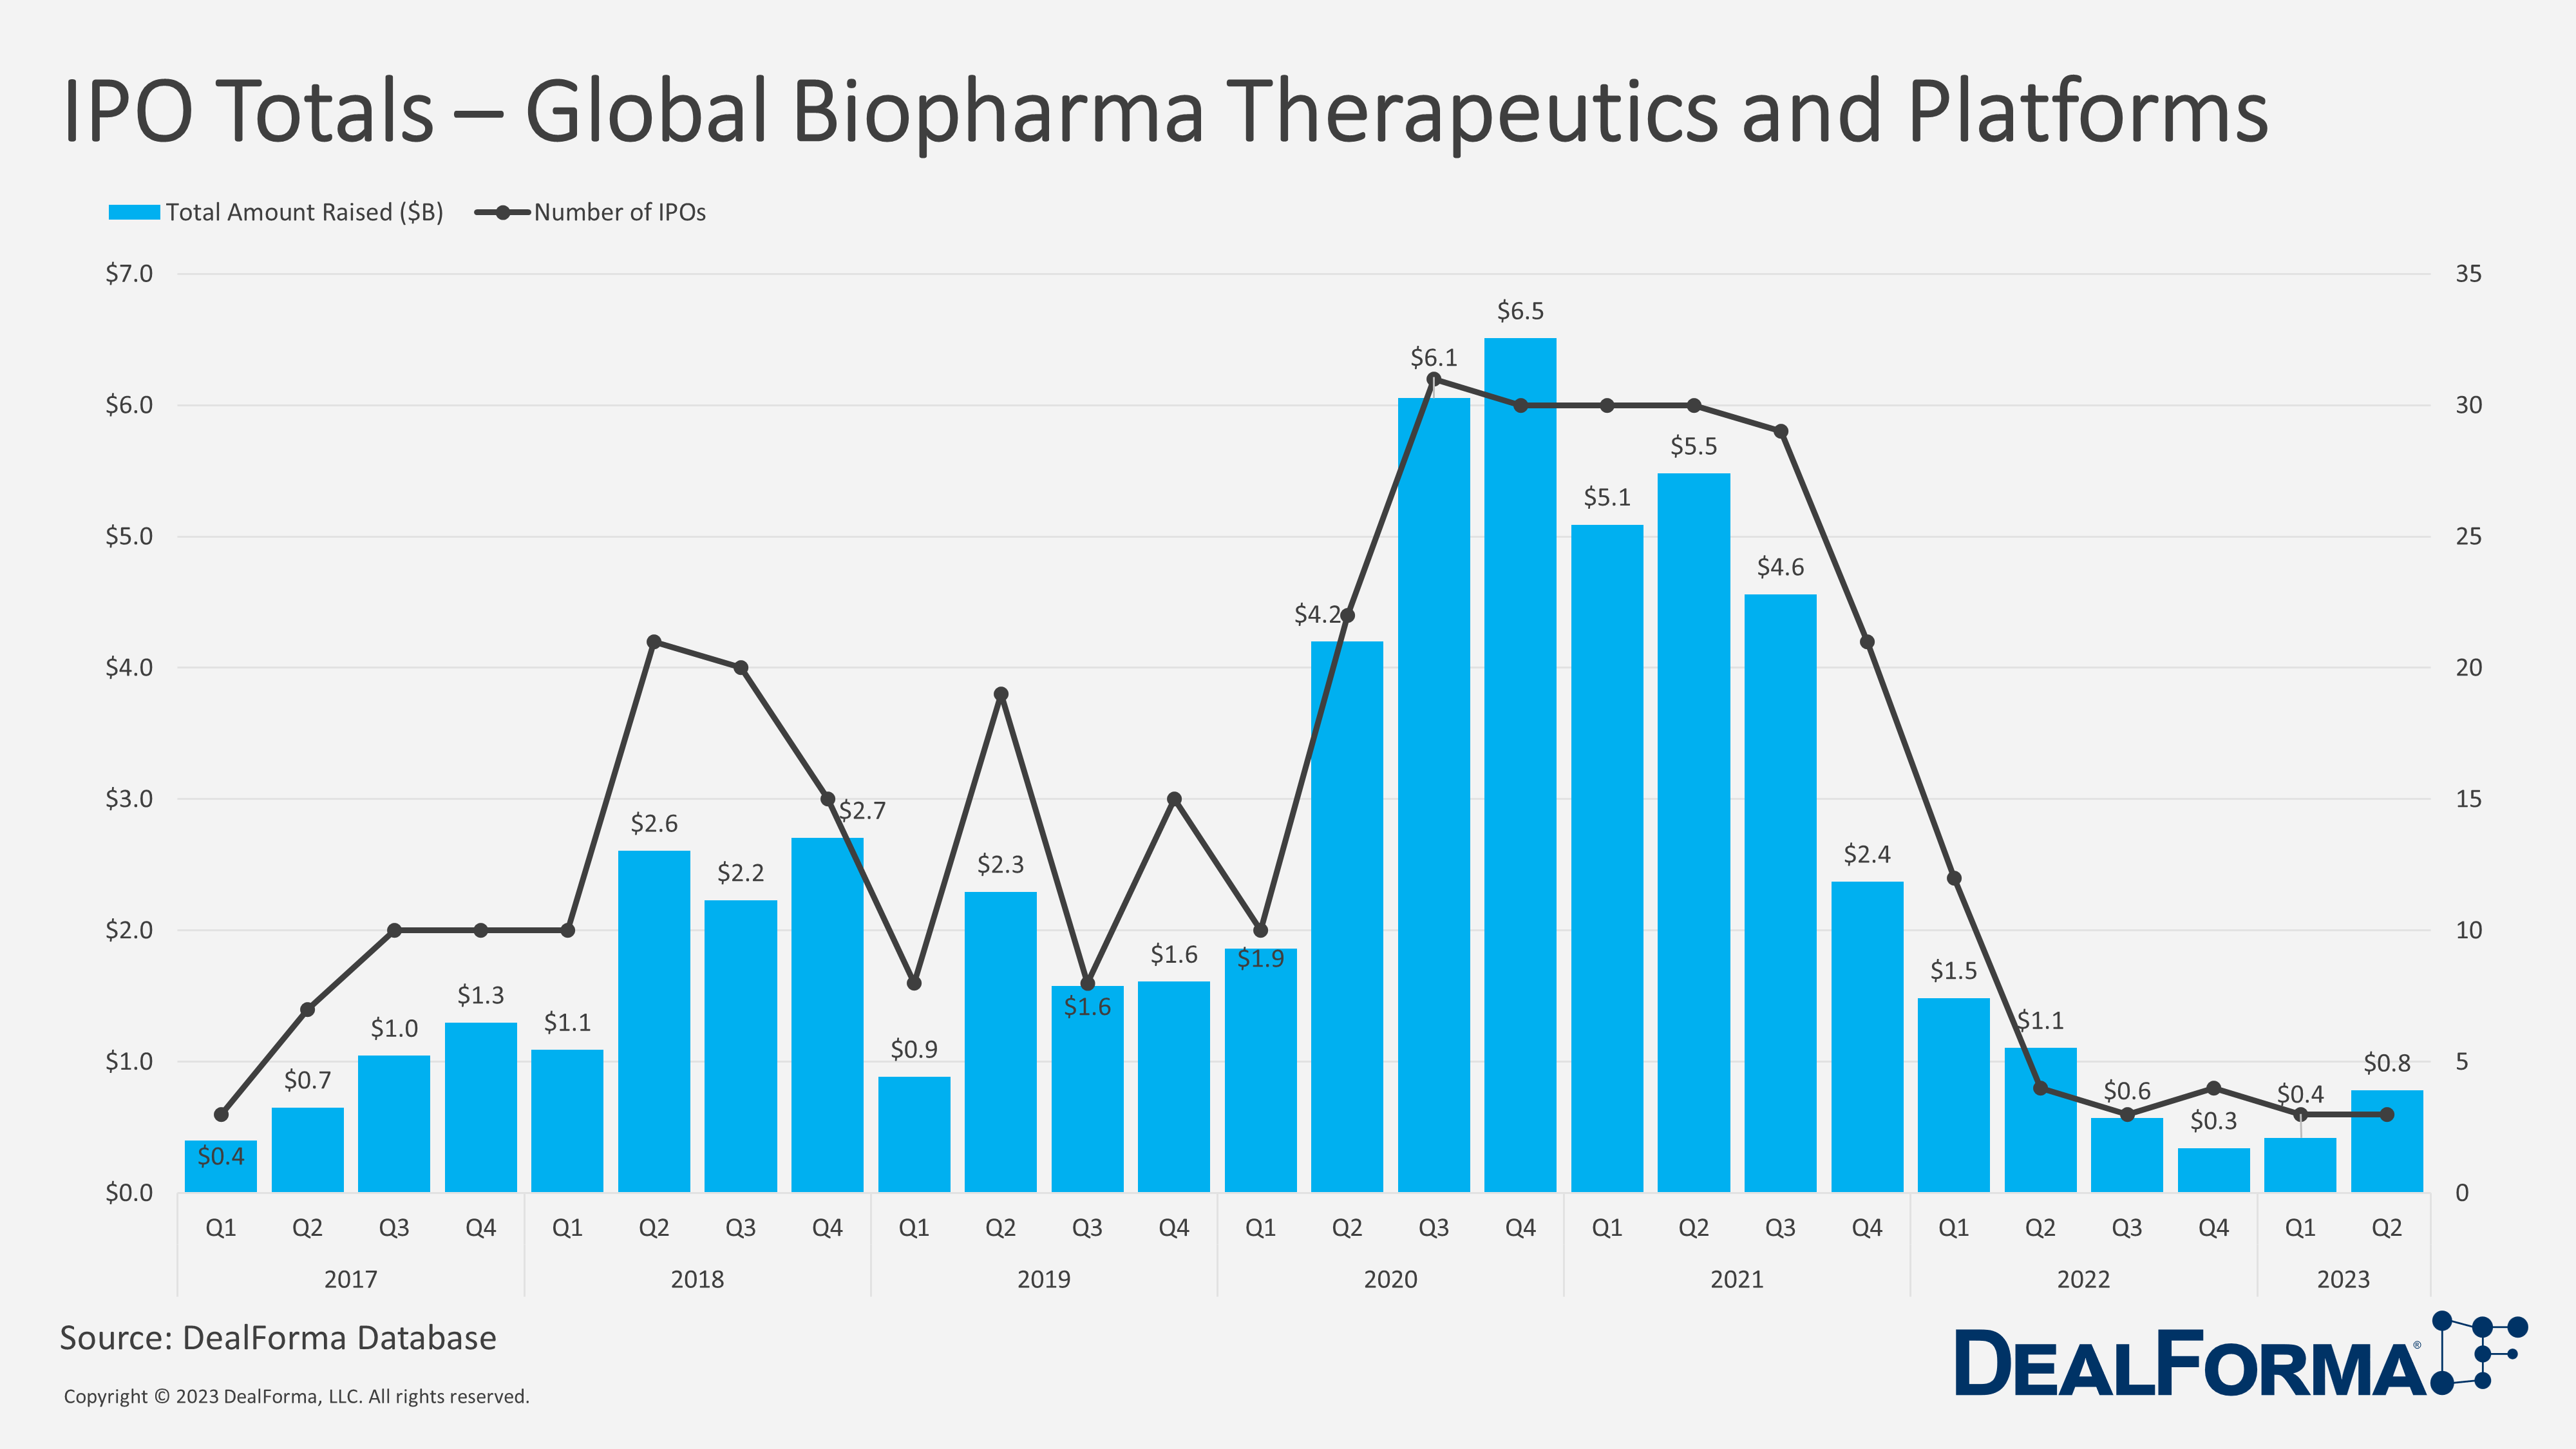 Dealforma - IP Totals - Biopharma Therapeutics and Platforms